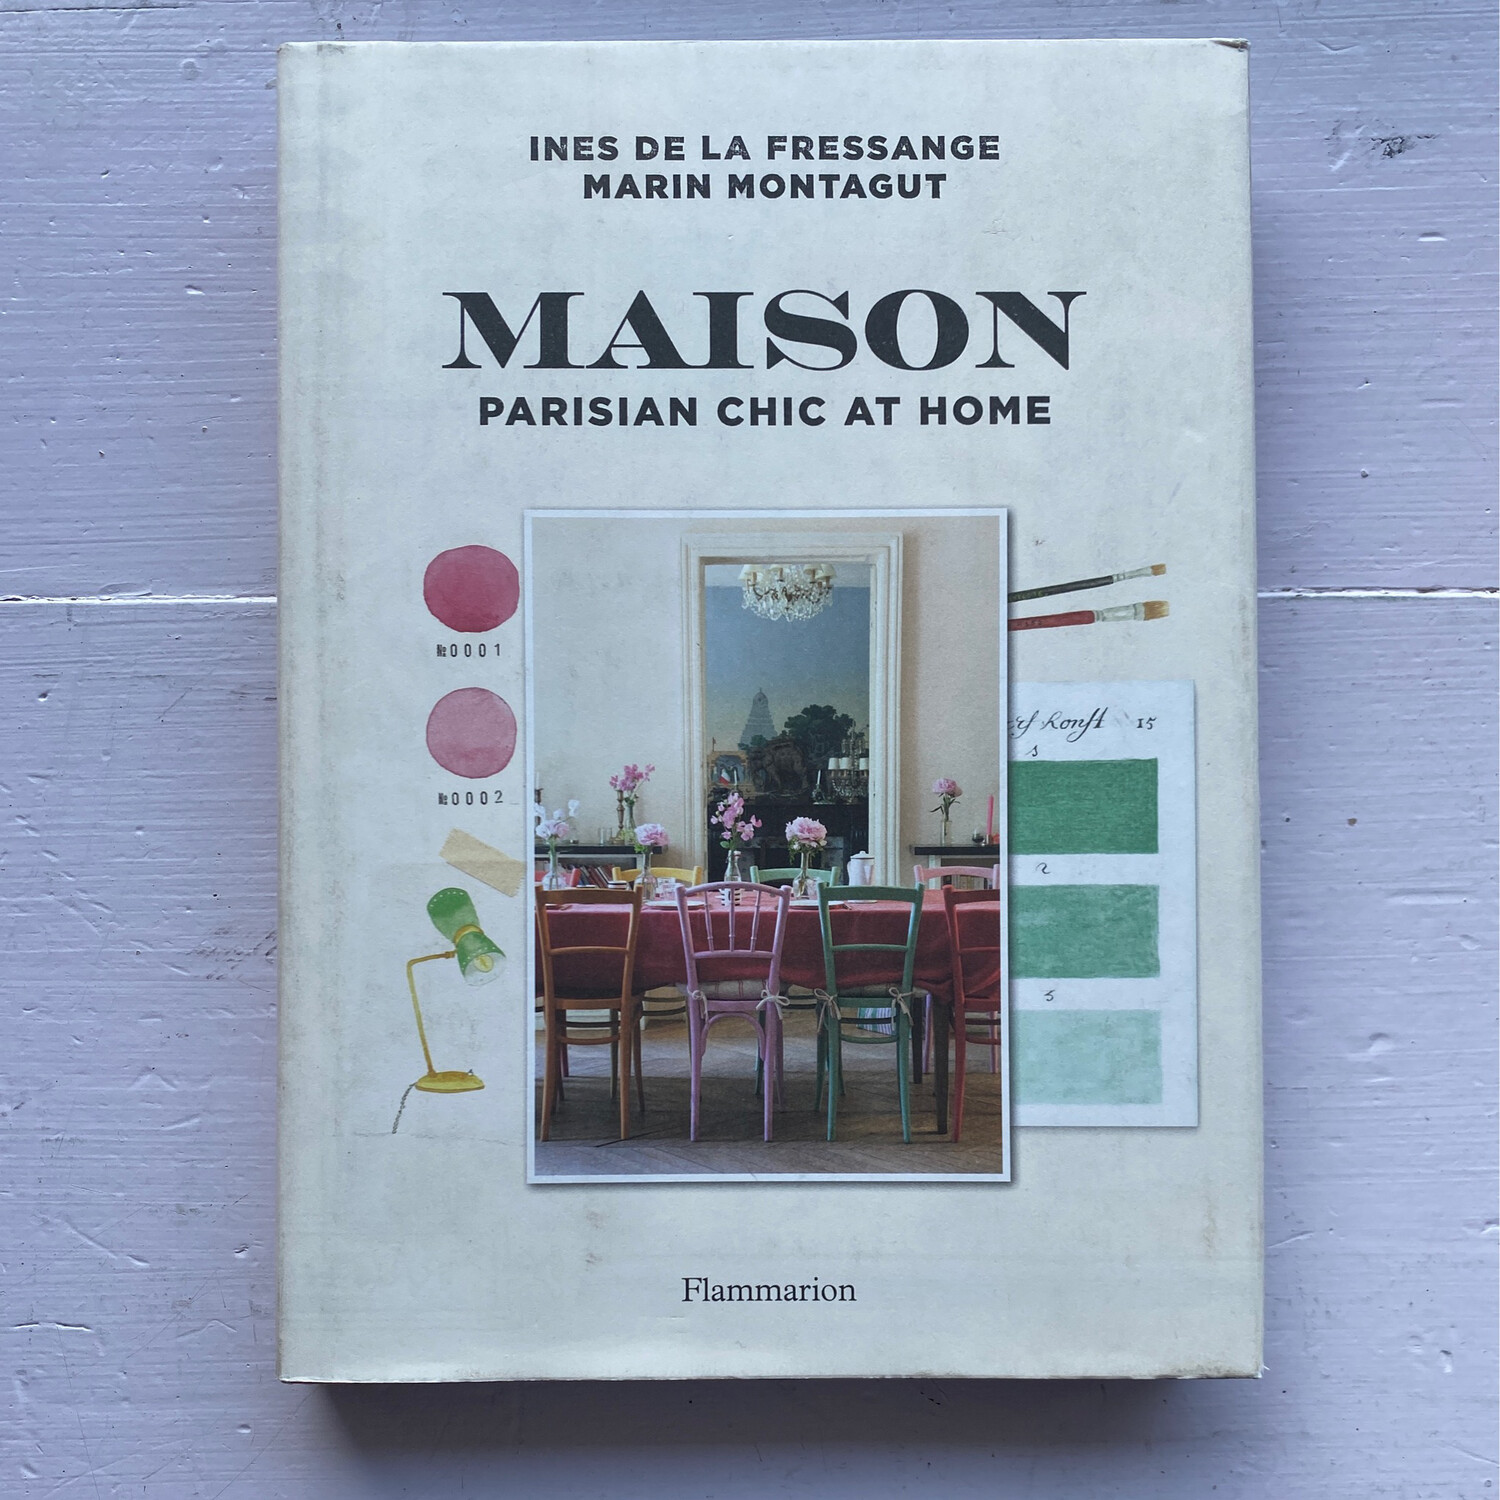 Maison: Parisian Chic At Home